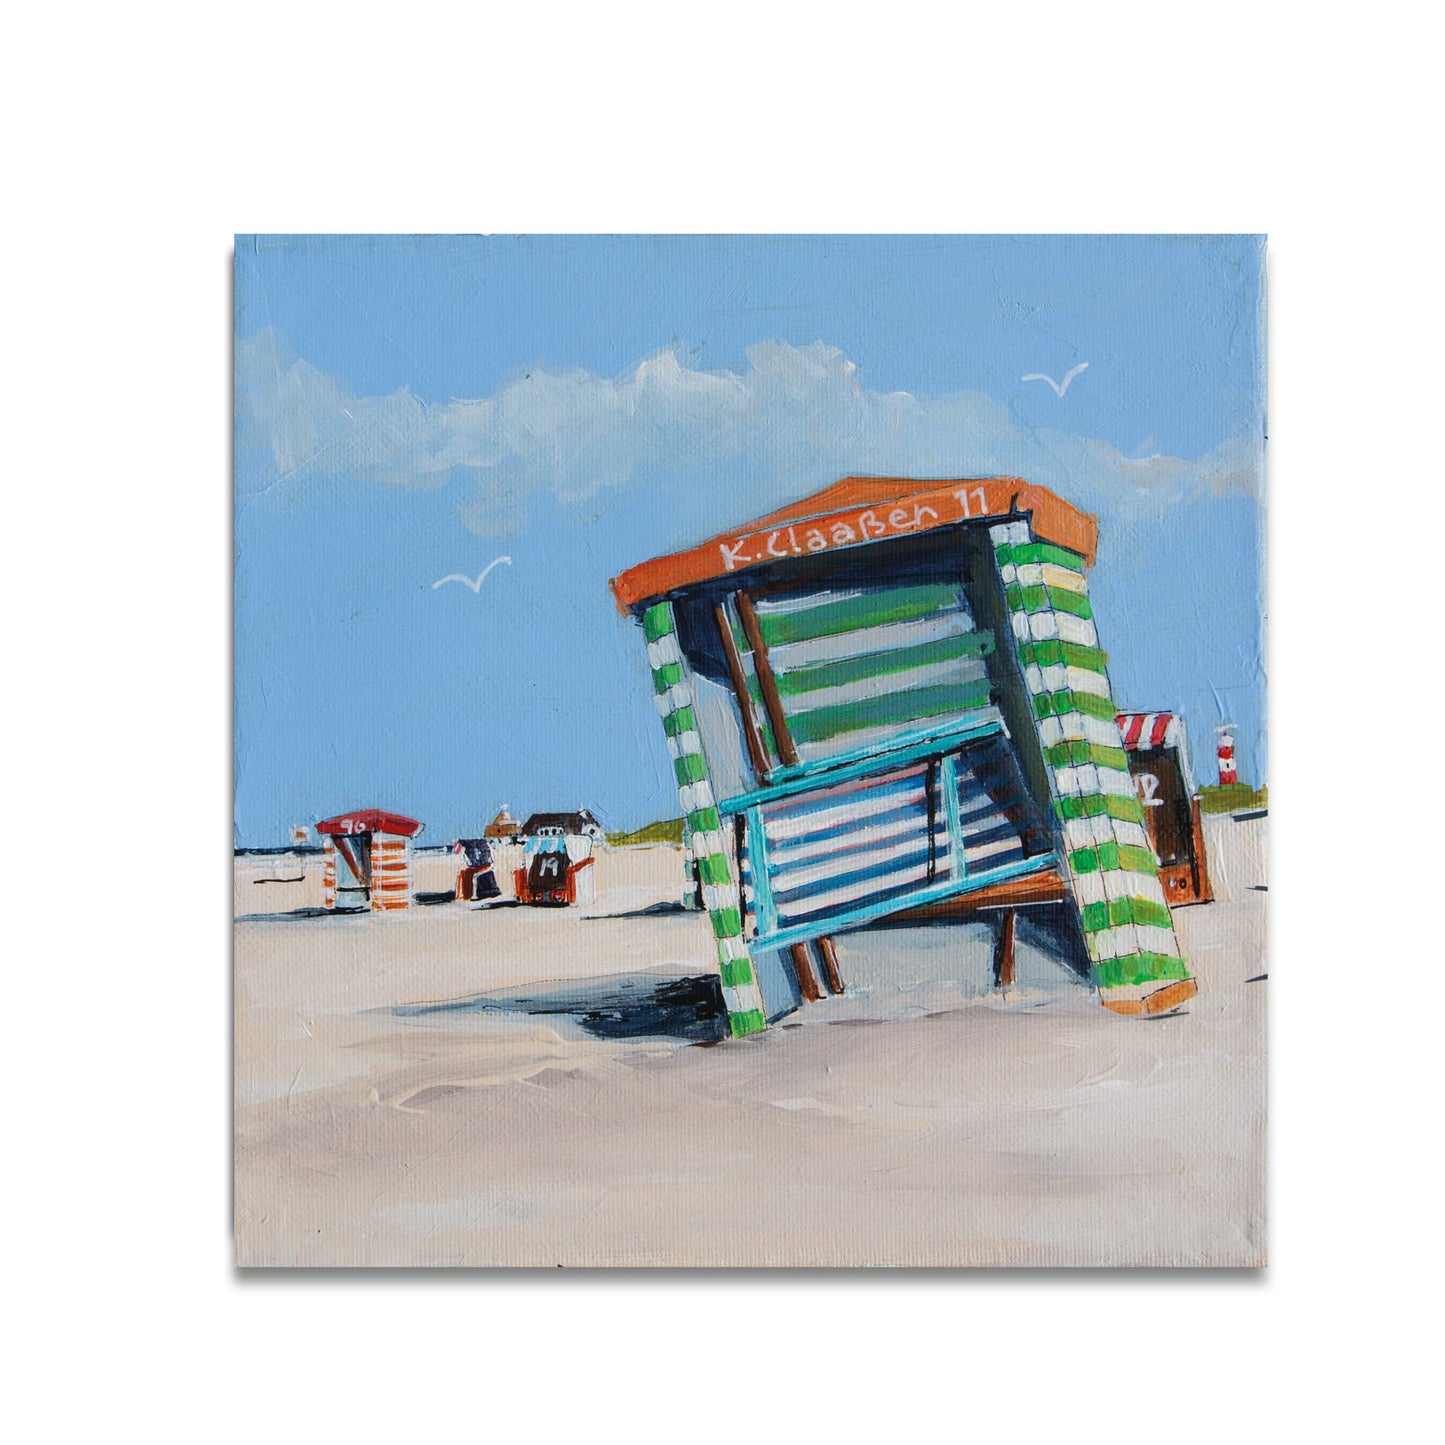 Strandzelte Borkum - Leinwanddruck/Canvas Print - 20 x 20 cm